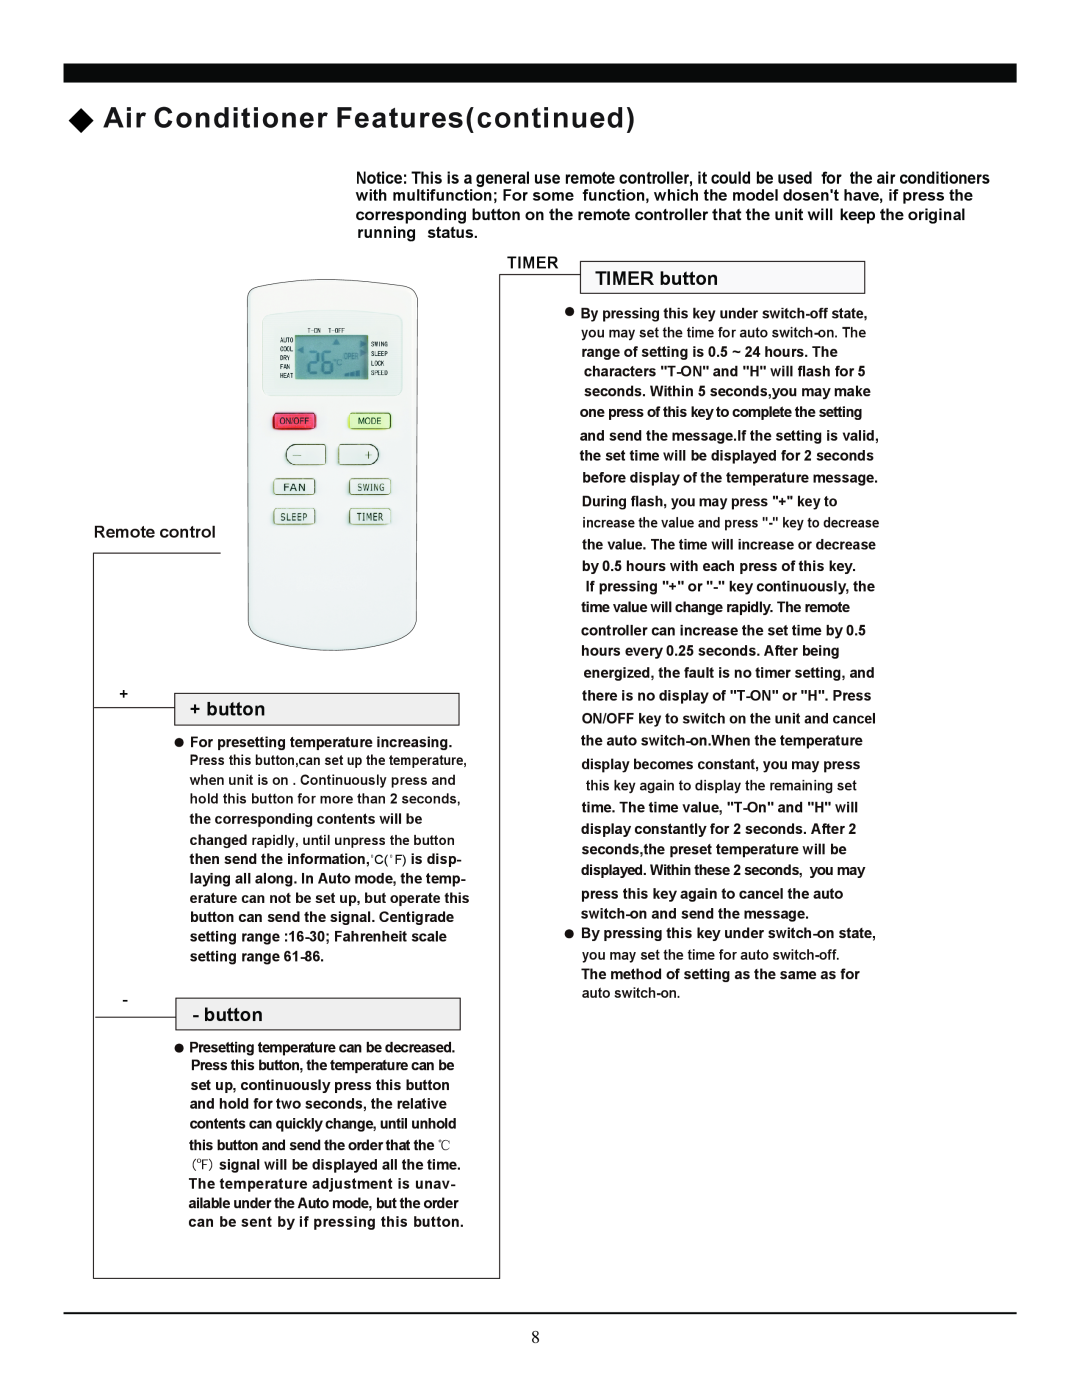 Soleus Air SG-TTW-12HC manual Air Conditioner Featurescontinued, TIMER button, + button, Timer, Remote control 